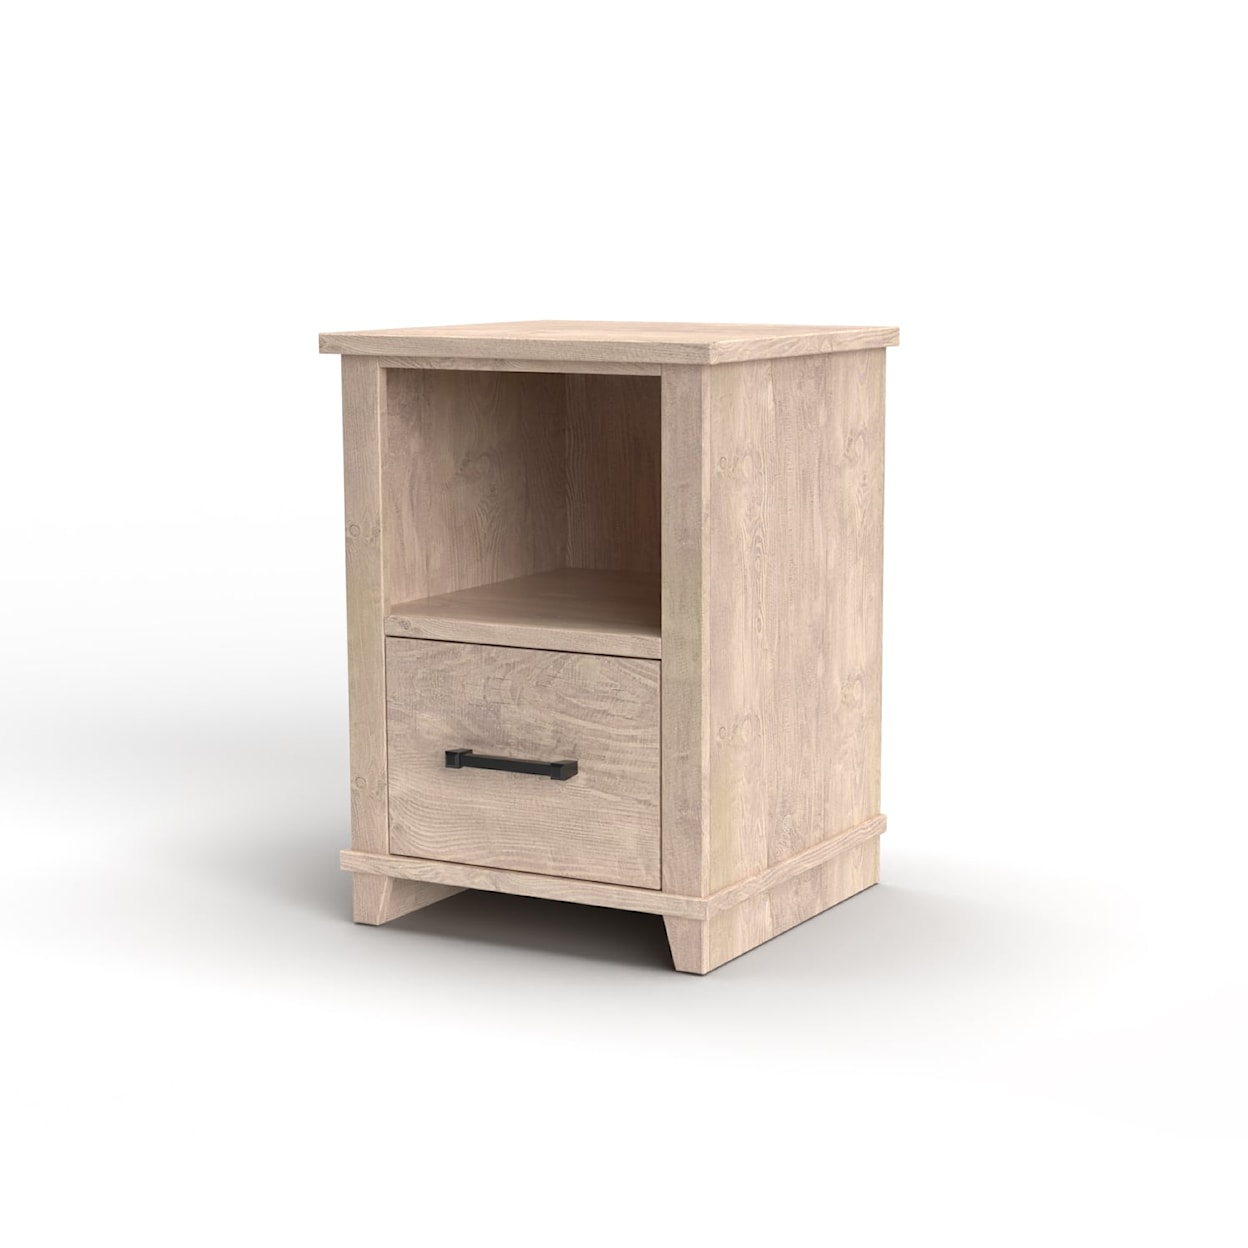 Legends Furniture Deer Valley File Cabinet with Storage